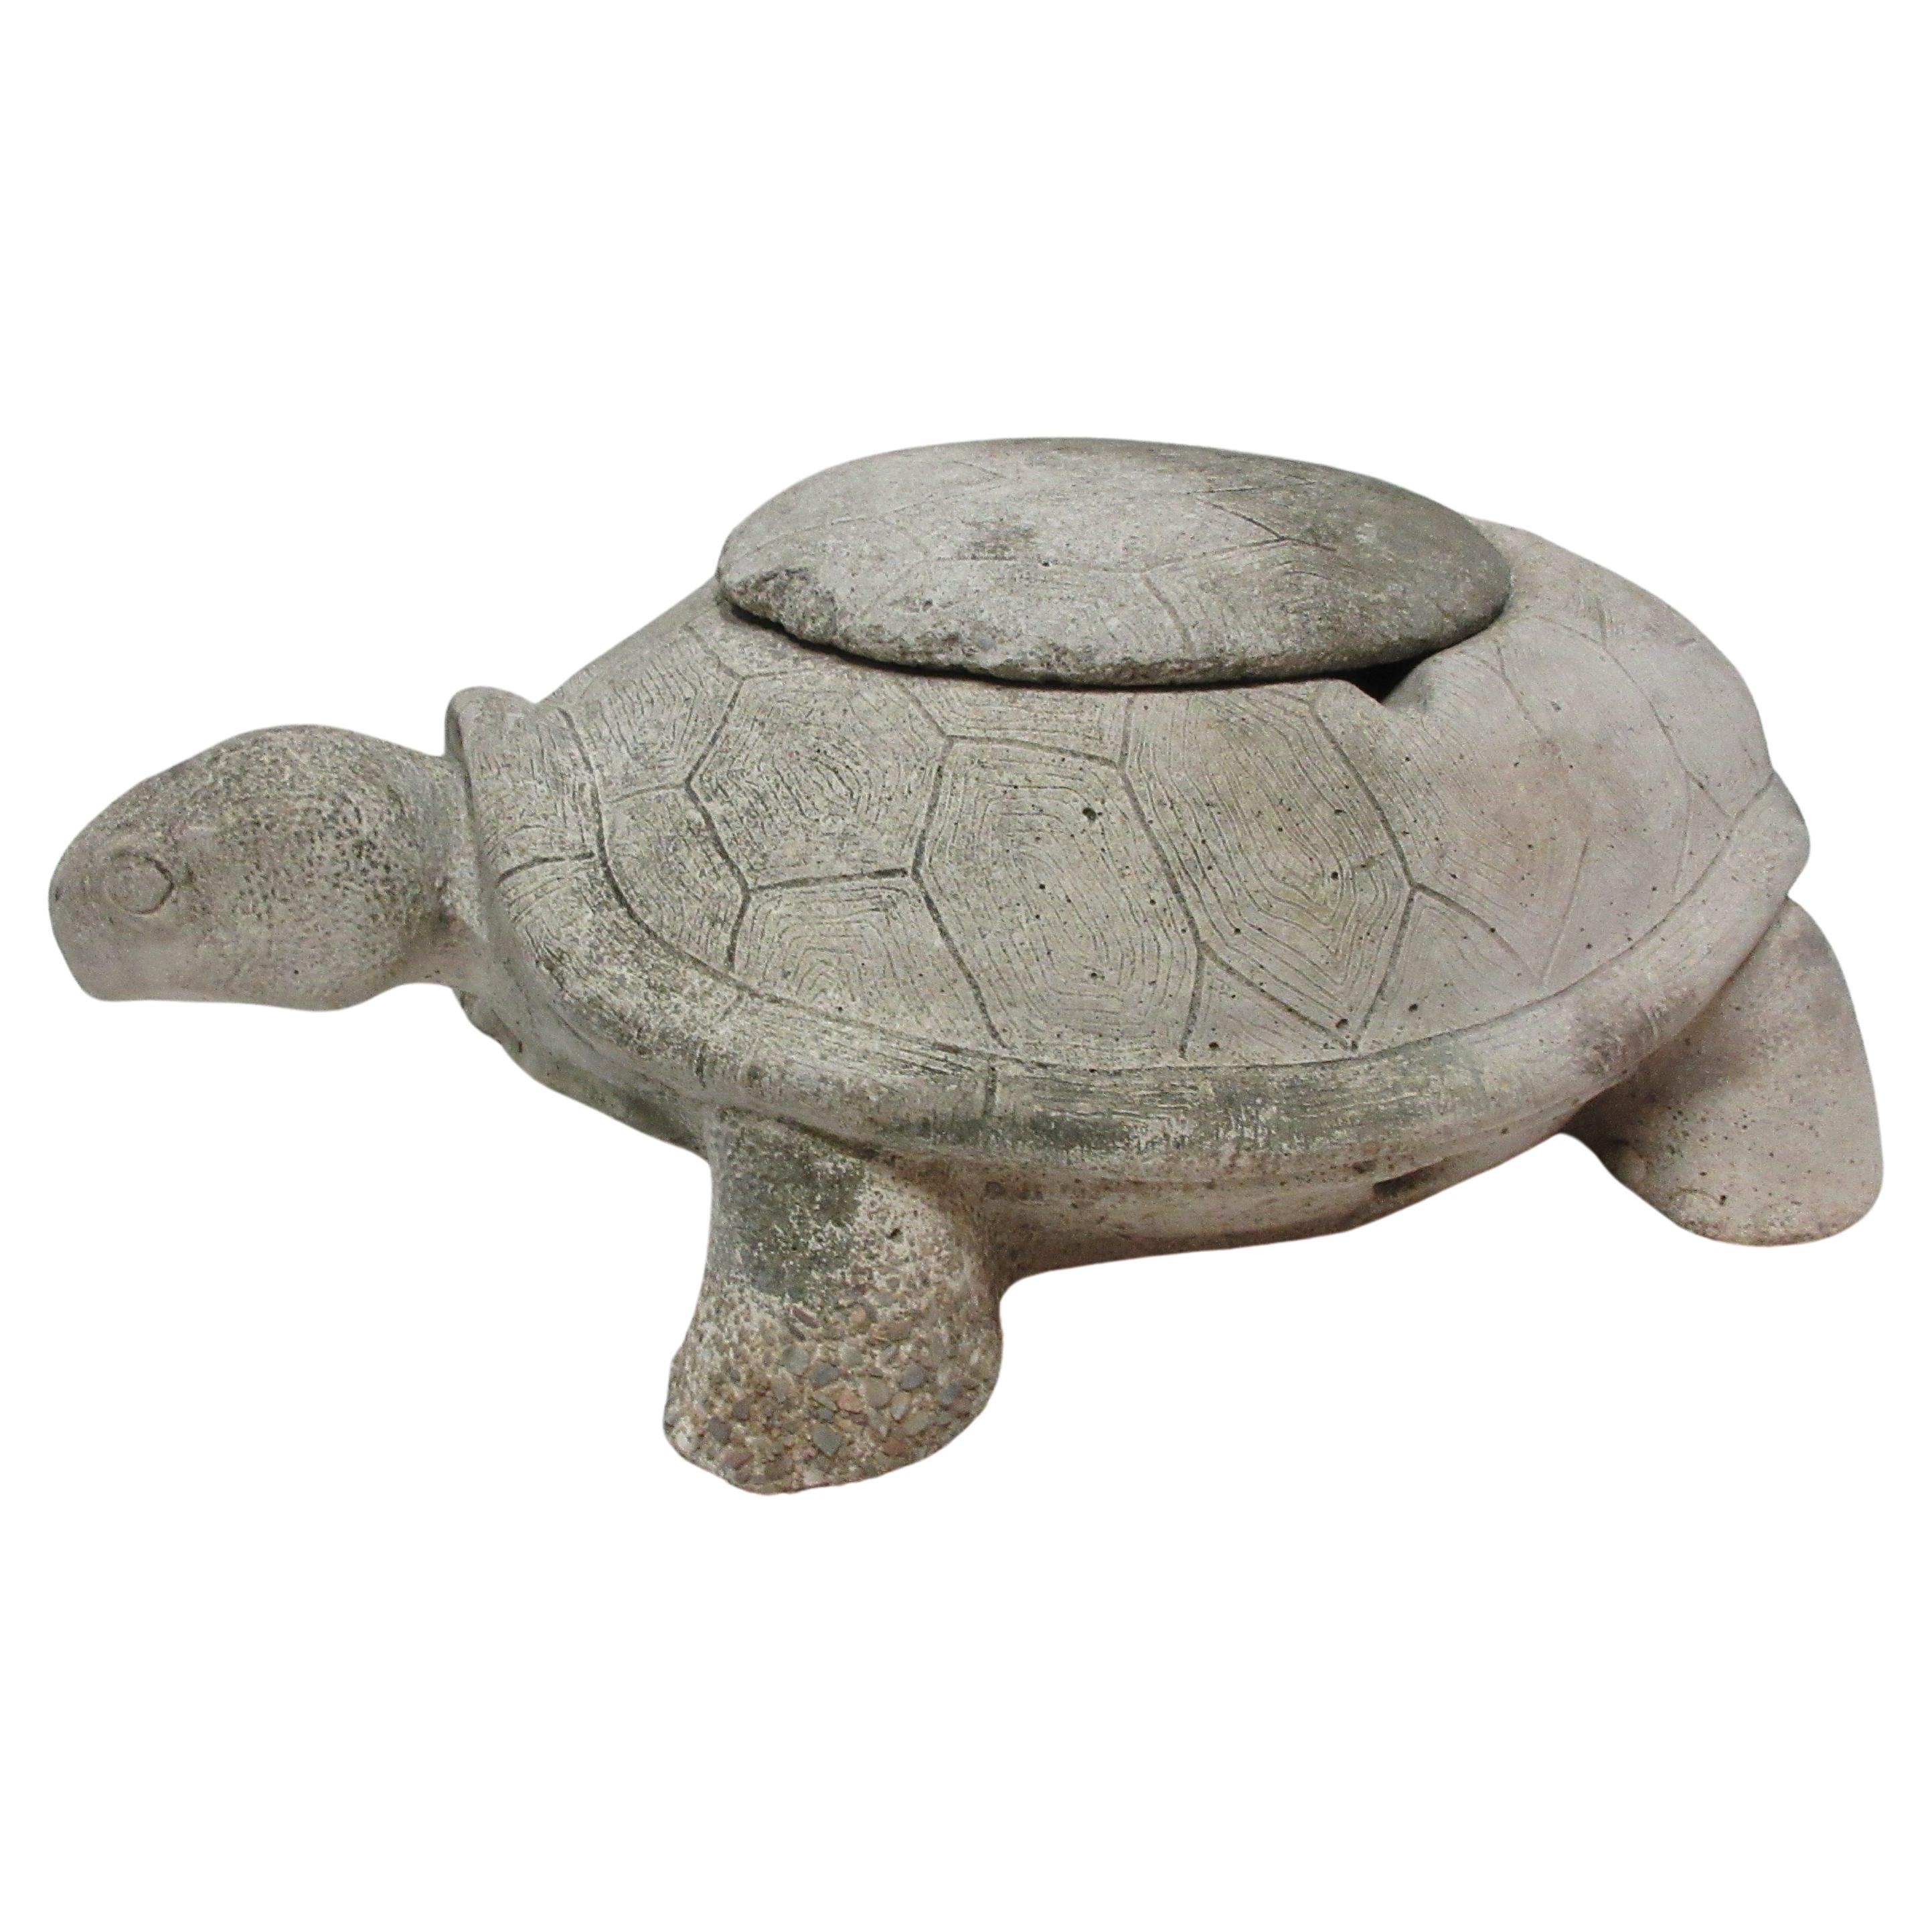  Garden Turtle For Sale